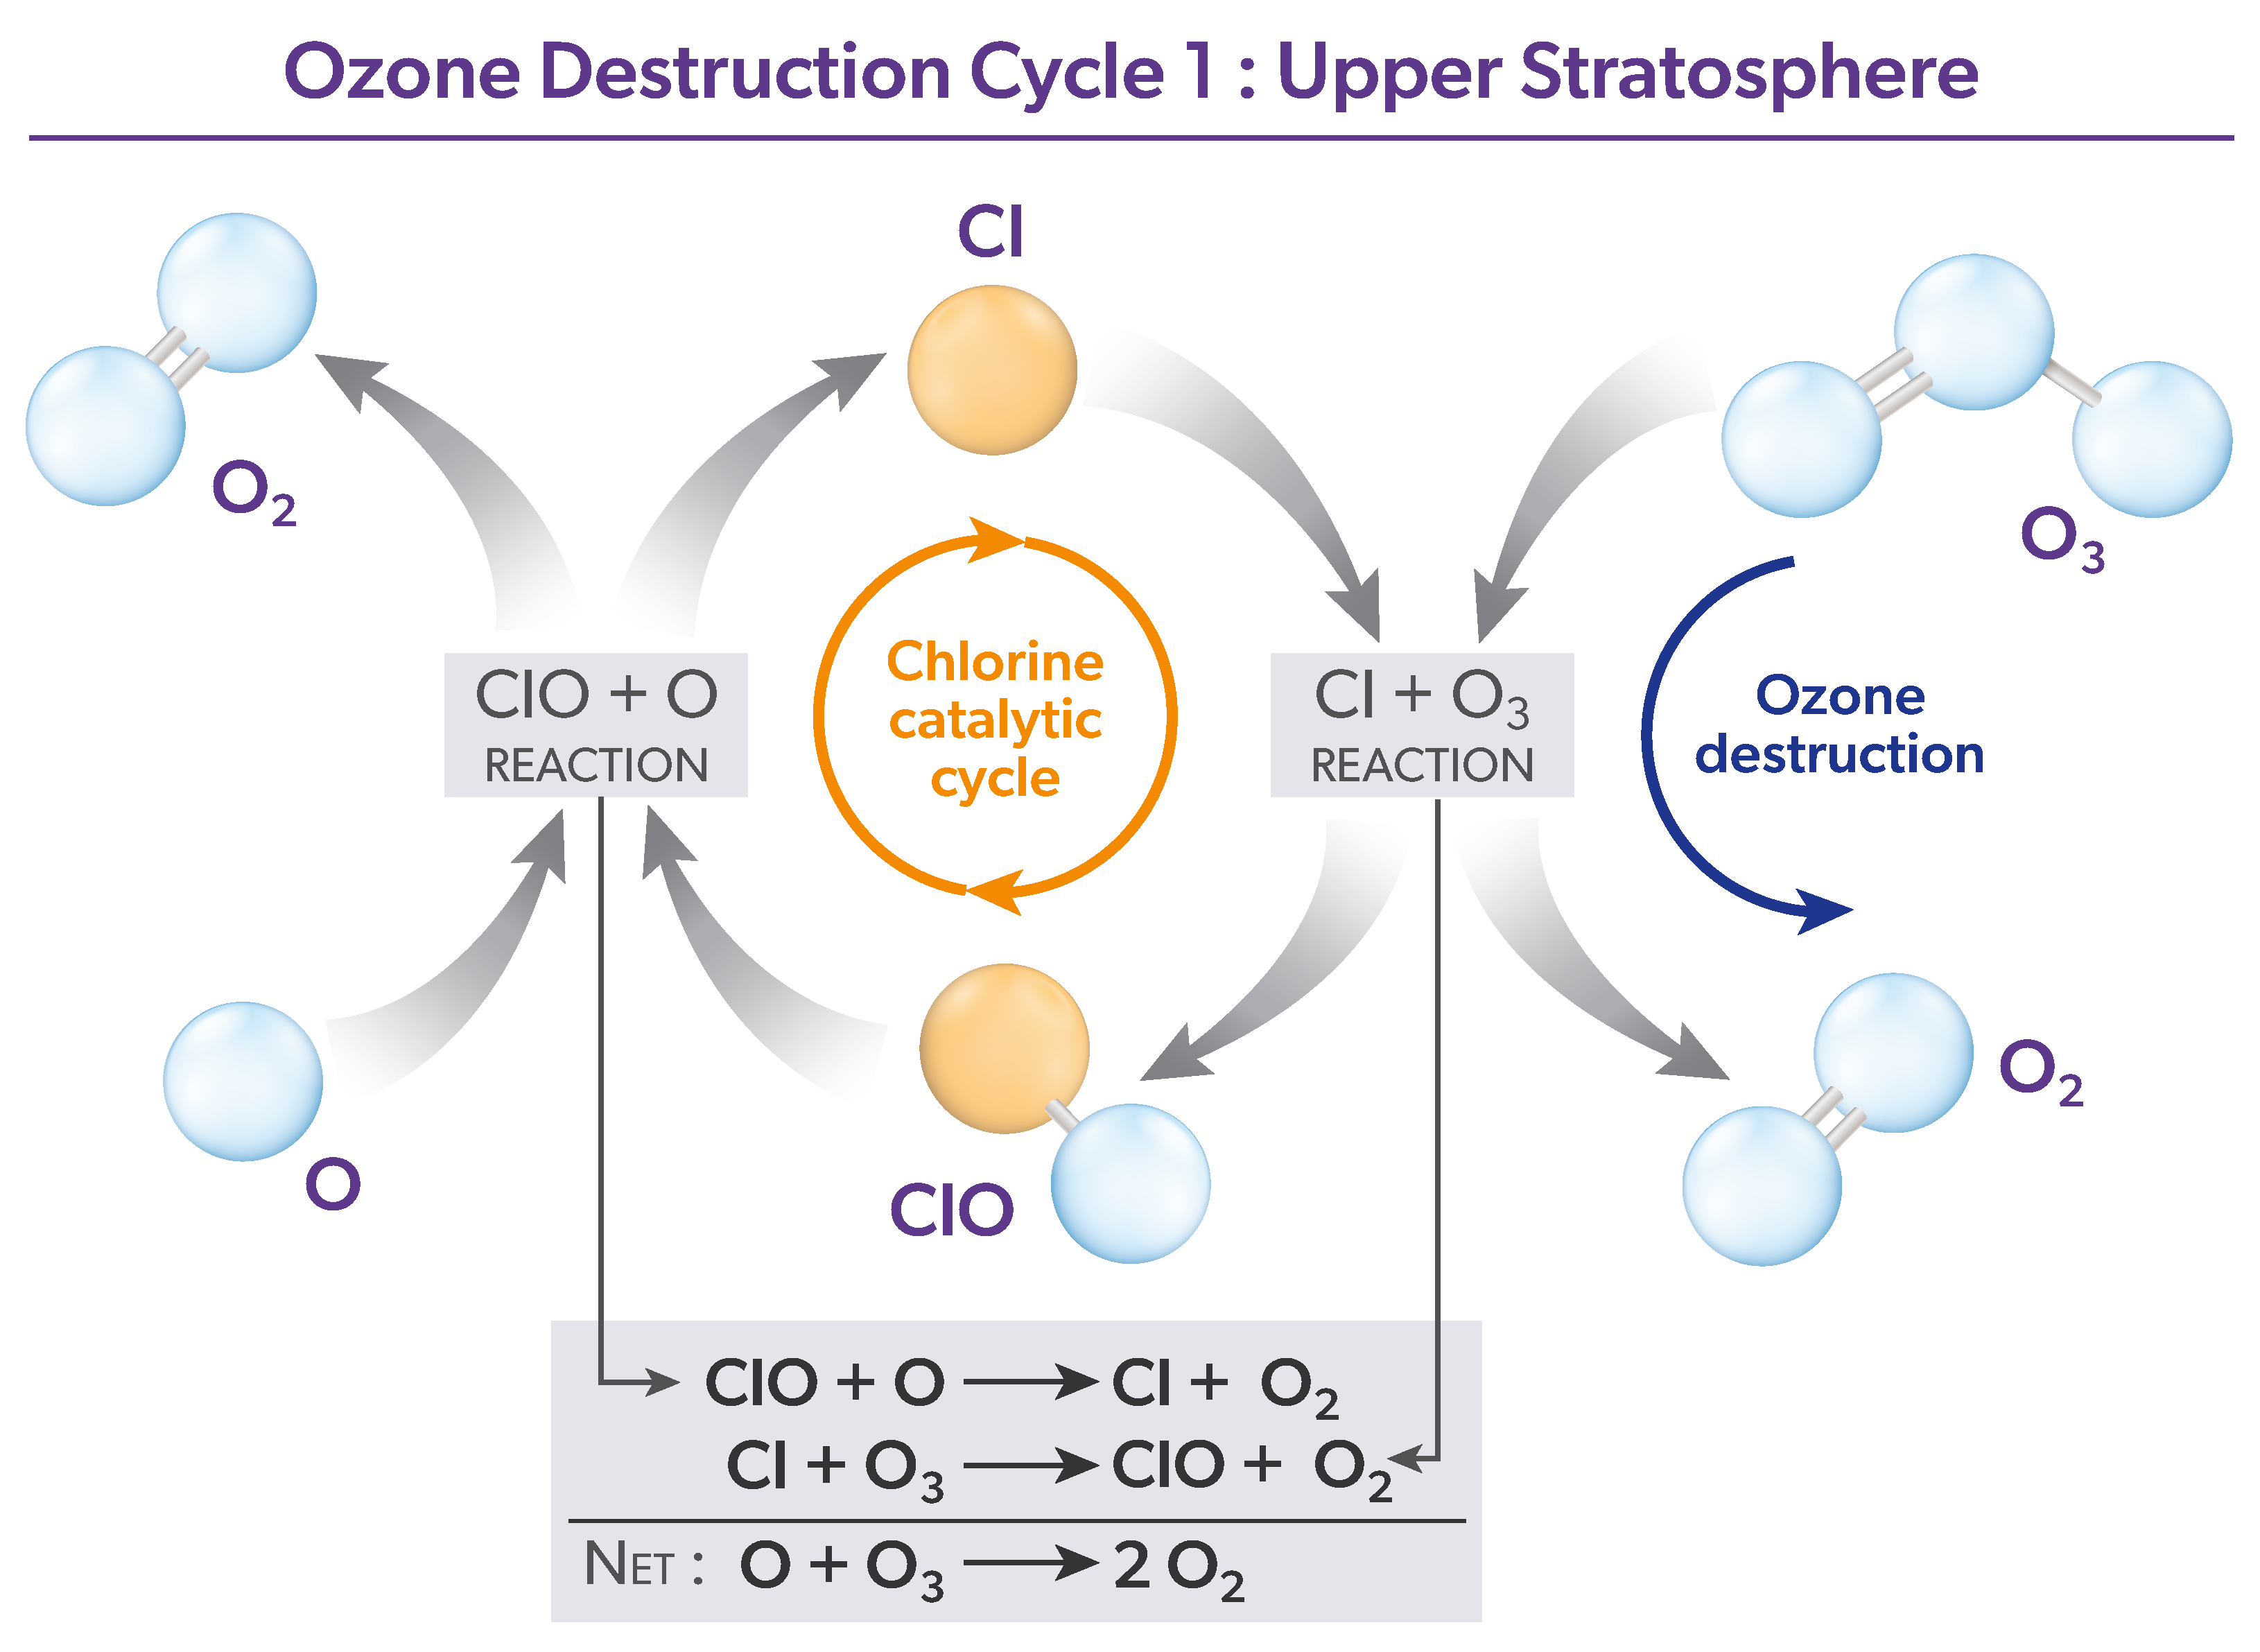 Ozone destruction Cycle 1